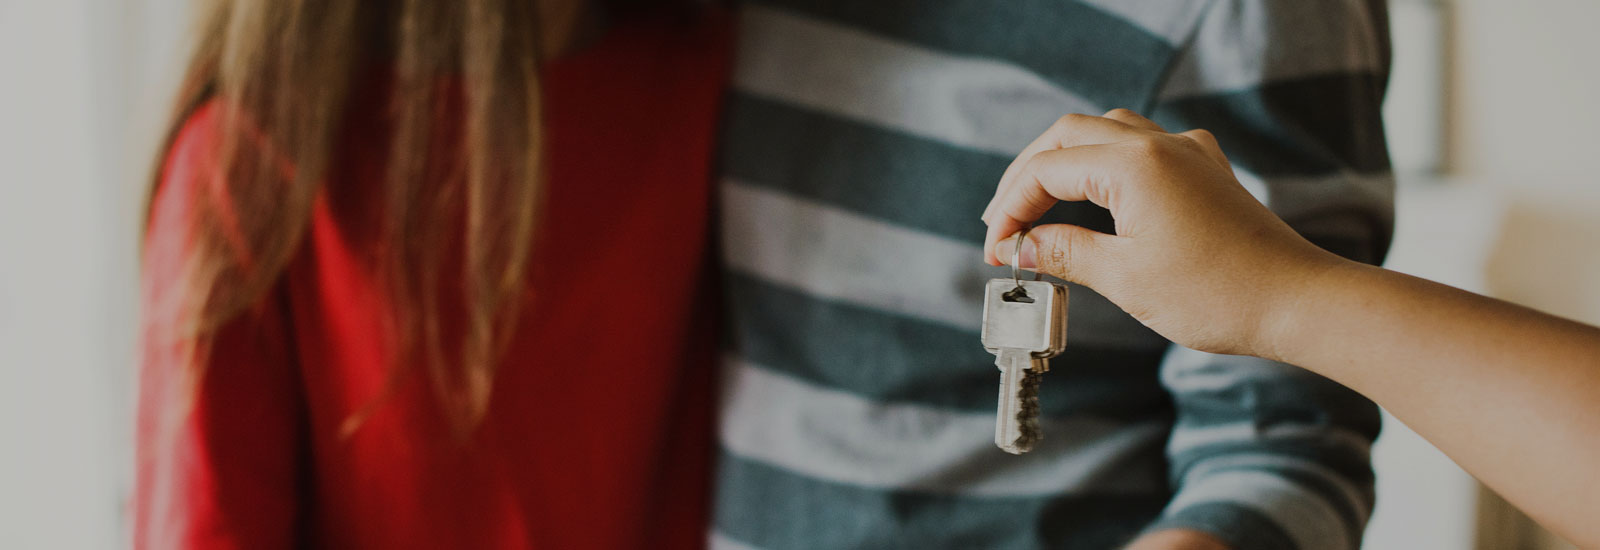 Photo of someone holding a set of house keys